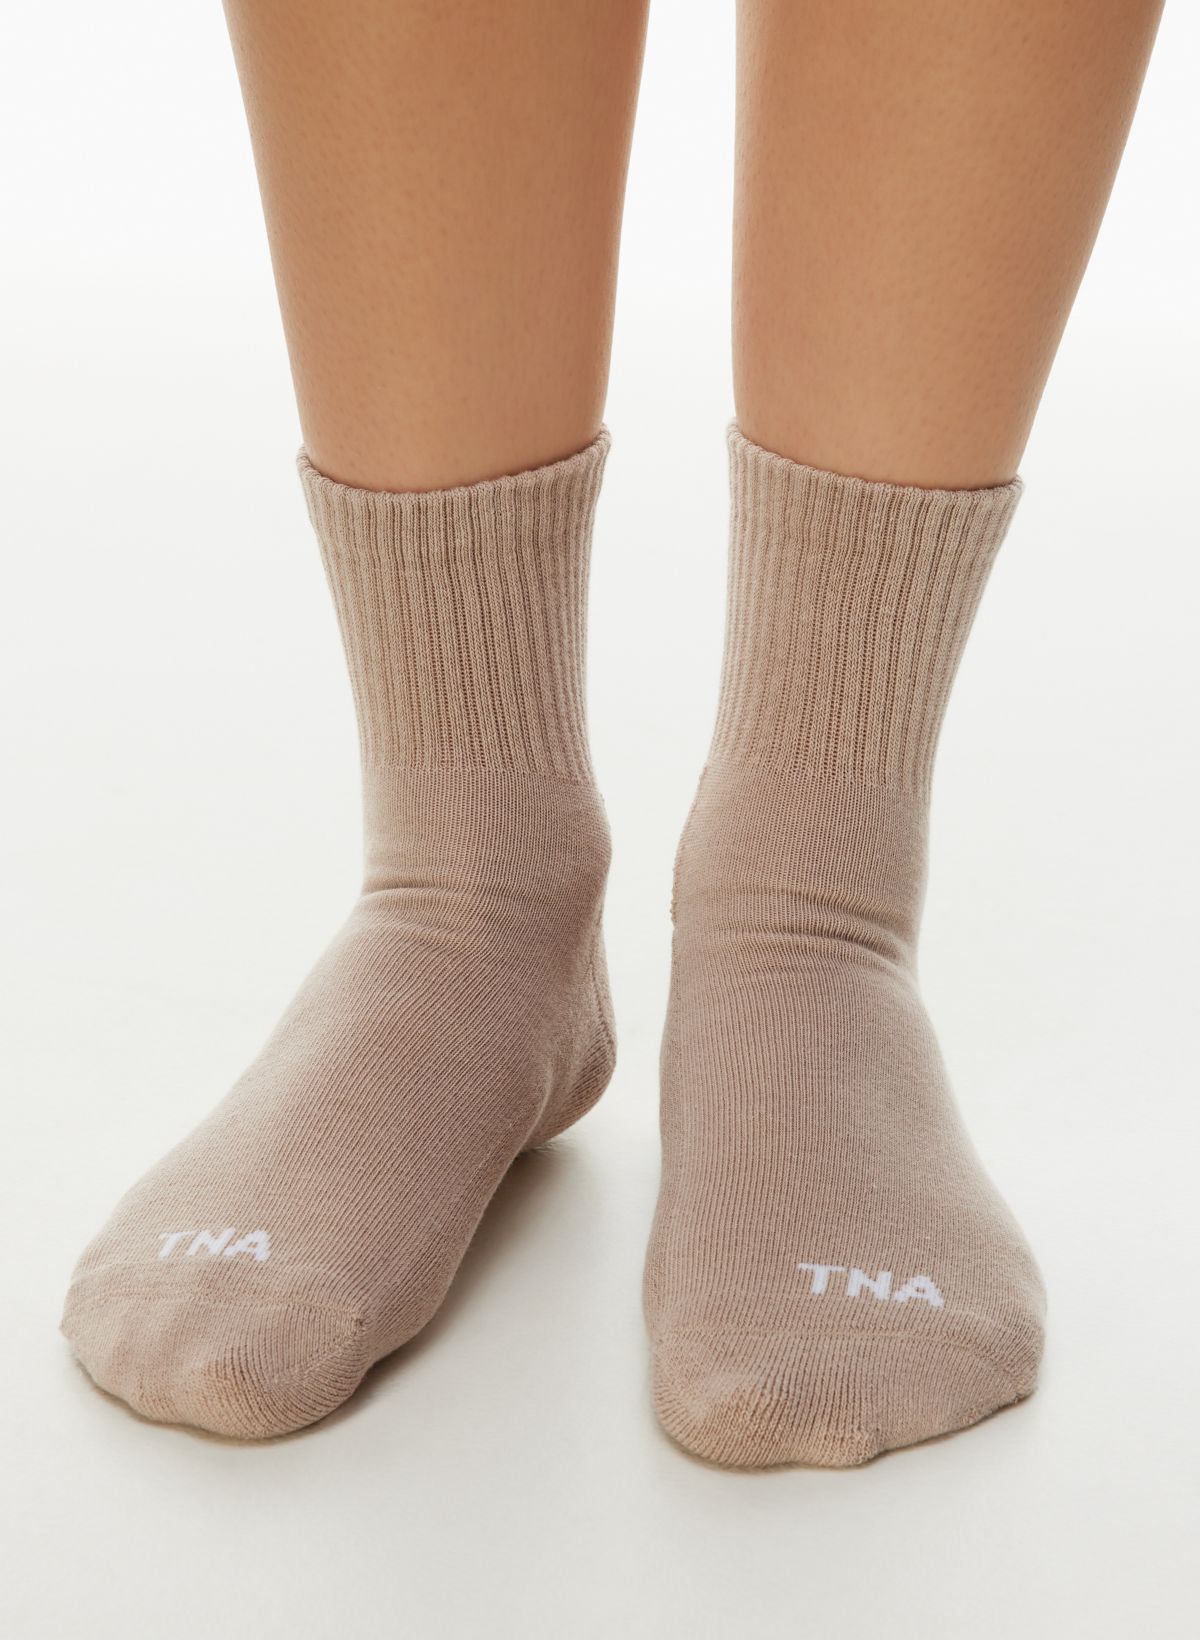 Customizable Socks  Cotton Athletic Ankle